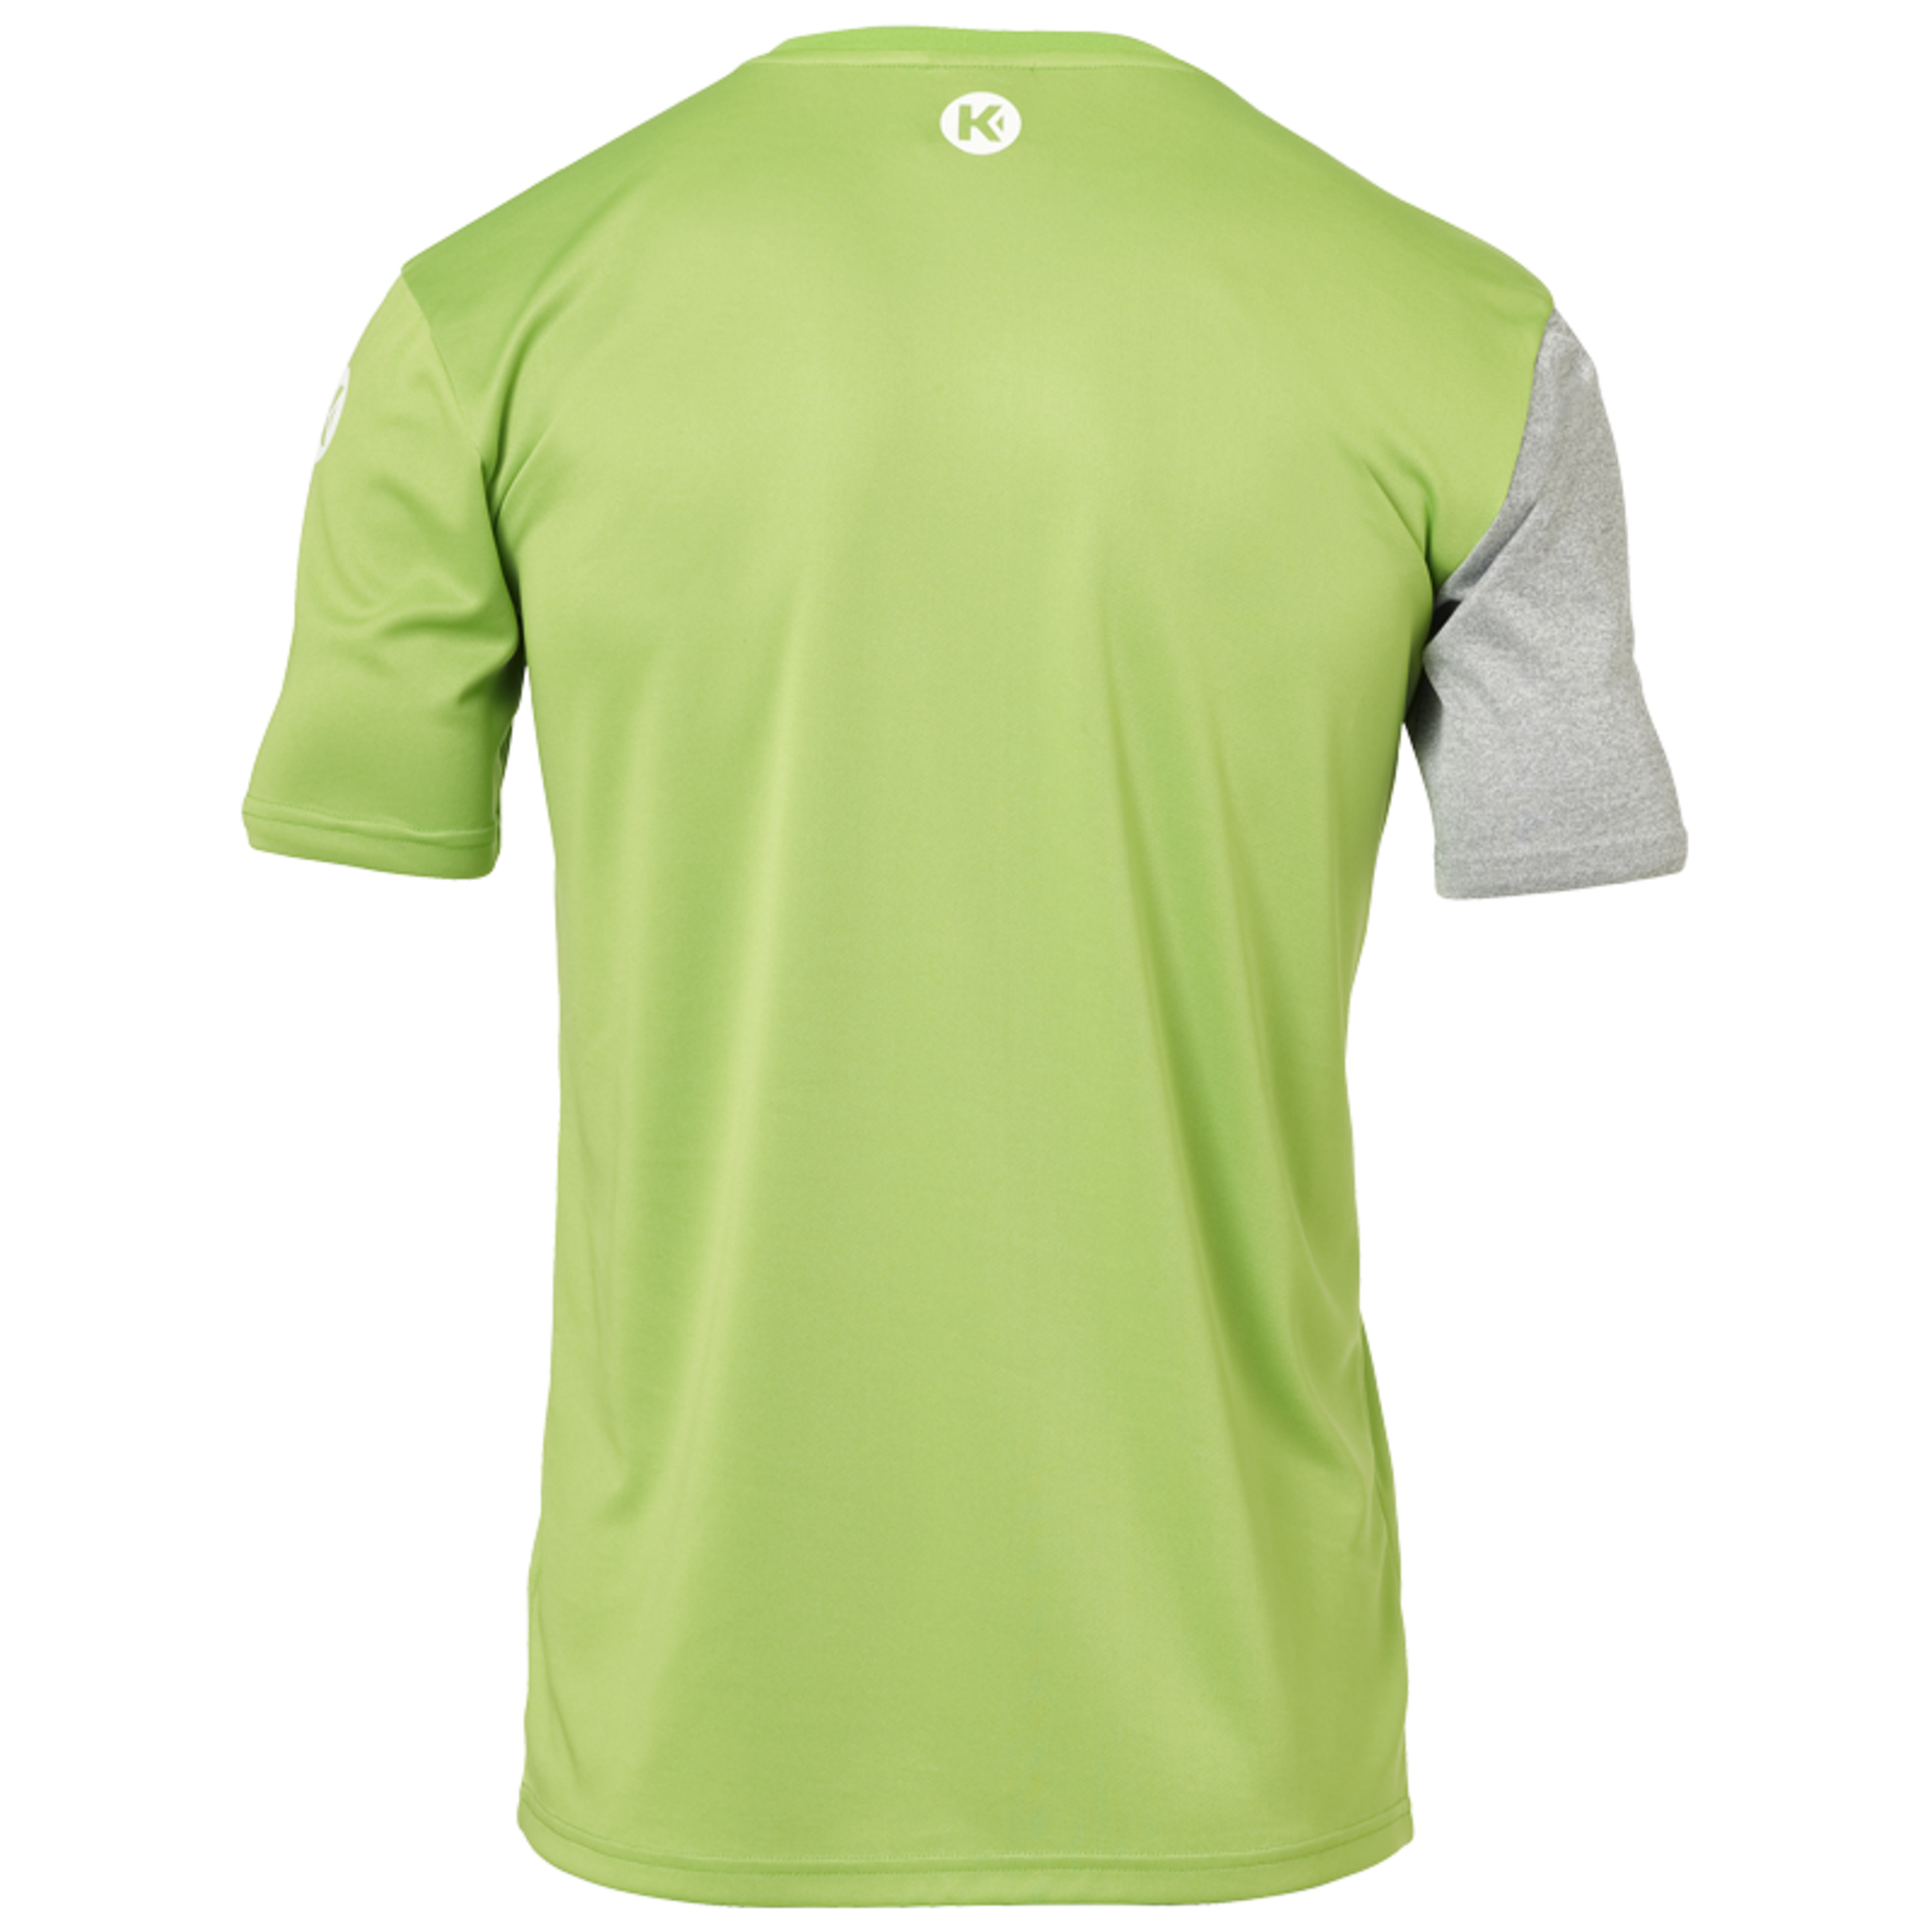 Core 2.0 Shirt Verde Esperanza/gris Oscu Kempa